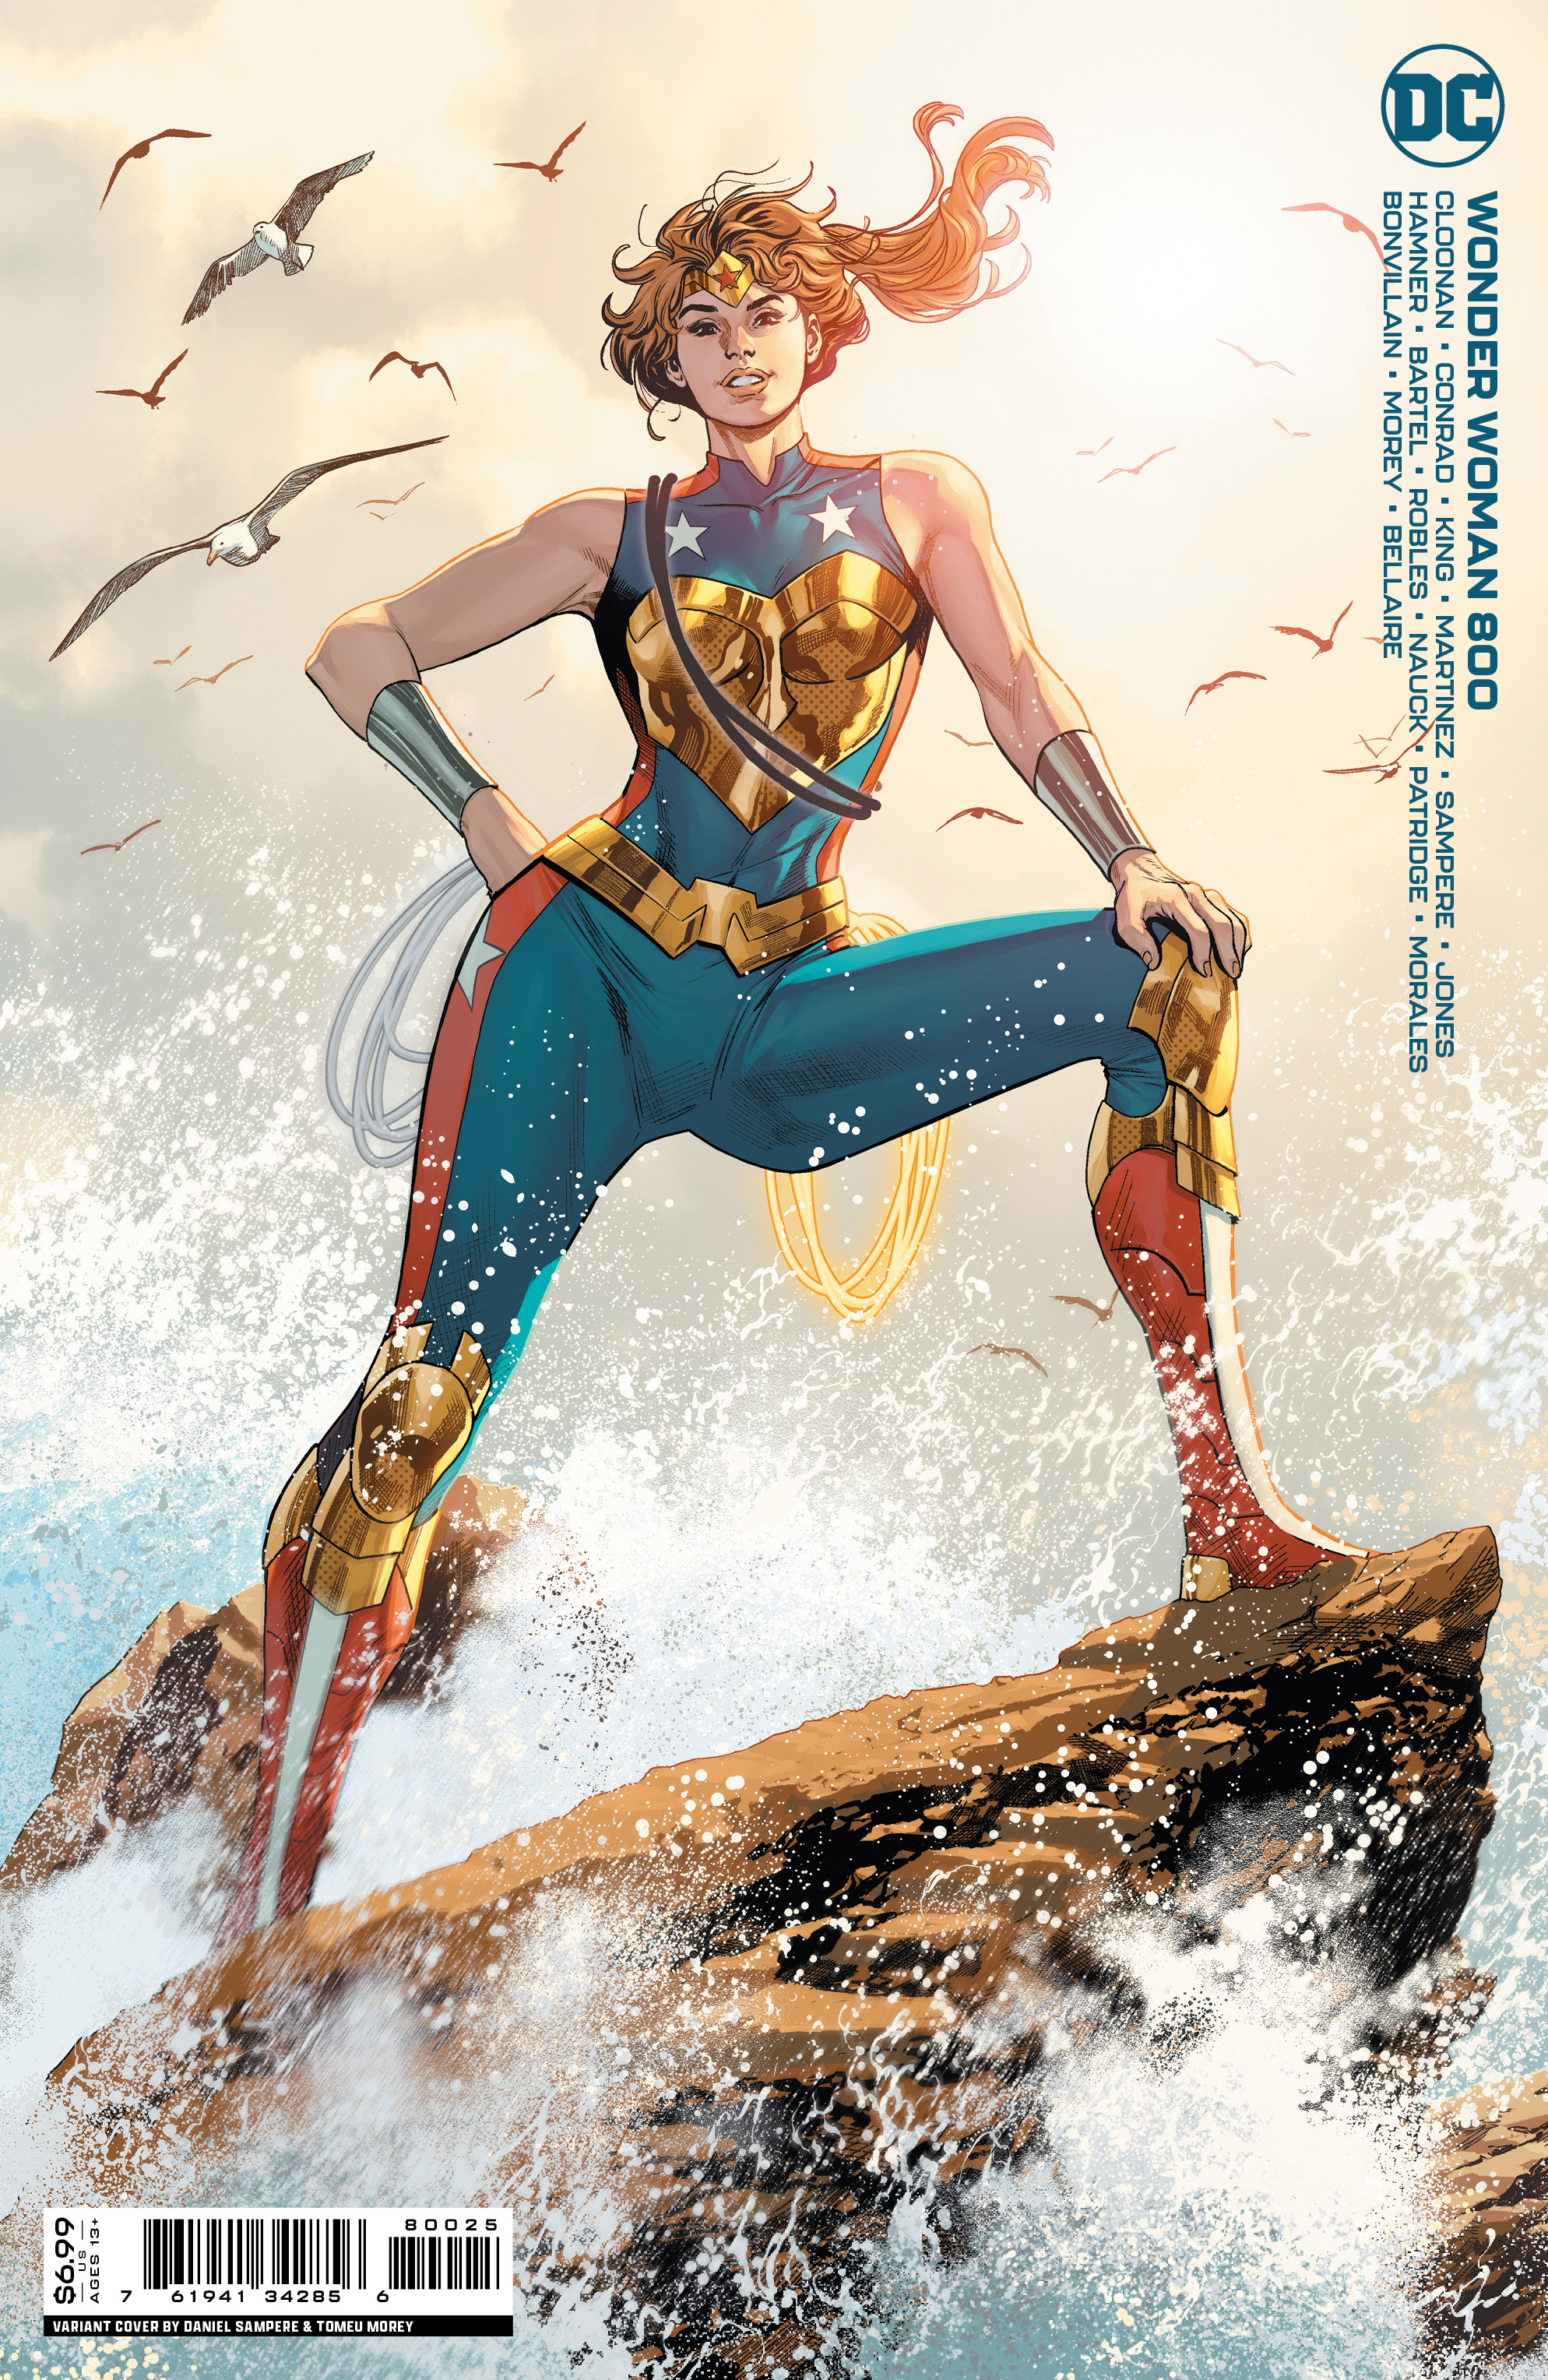 Wonder Woman Vol 1 800, DC Database